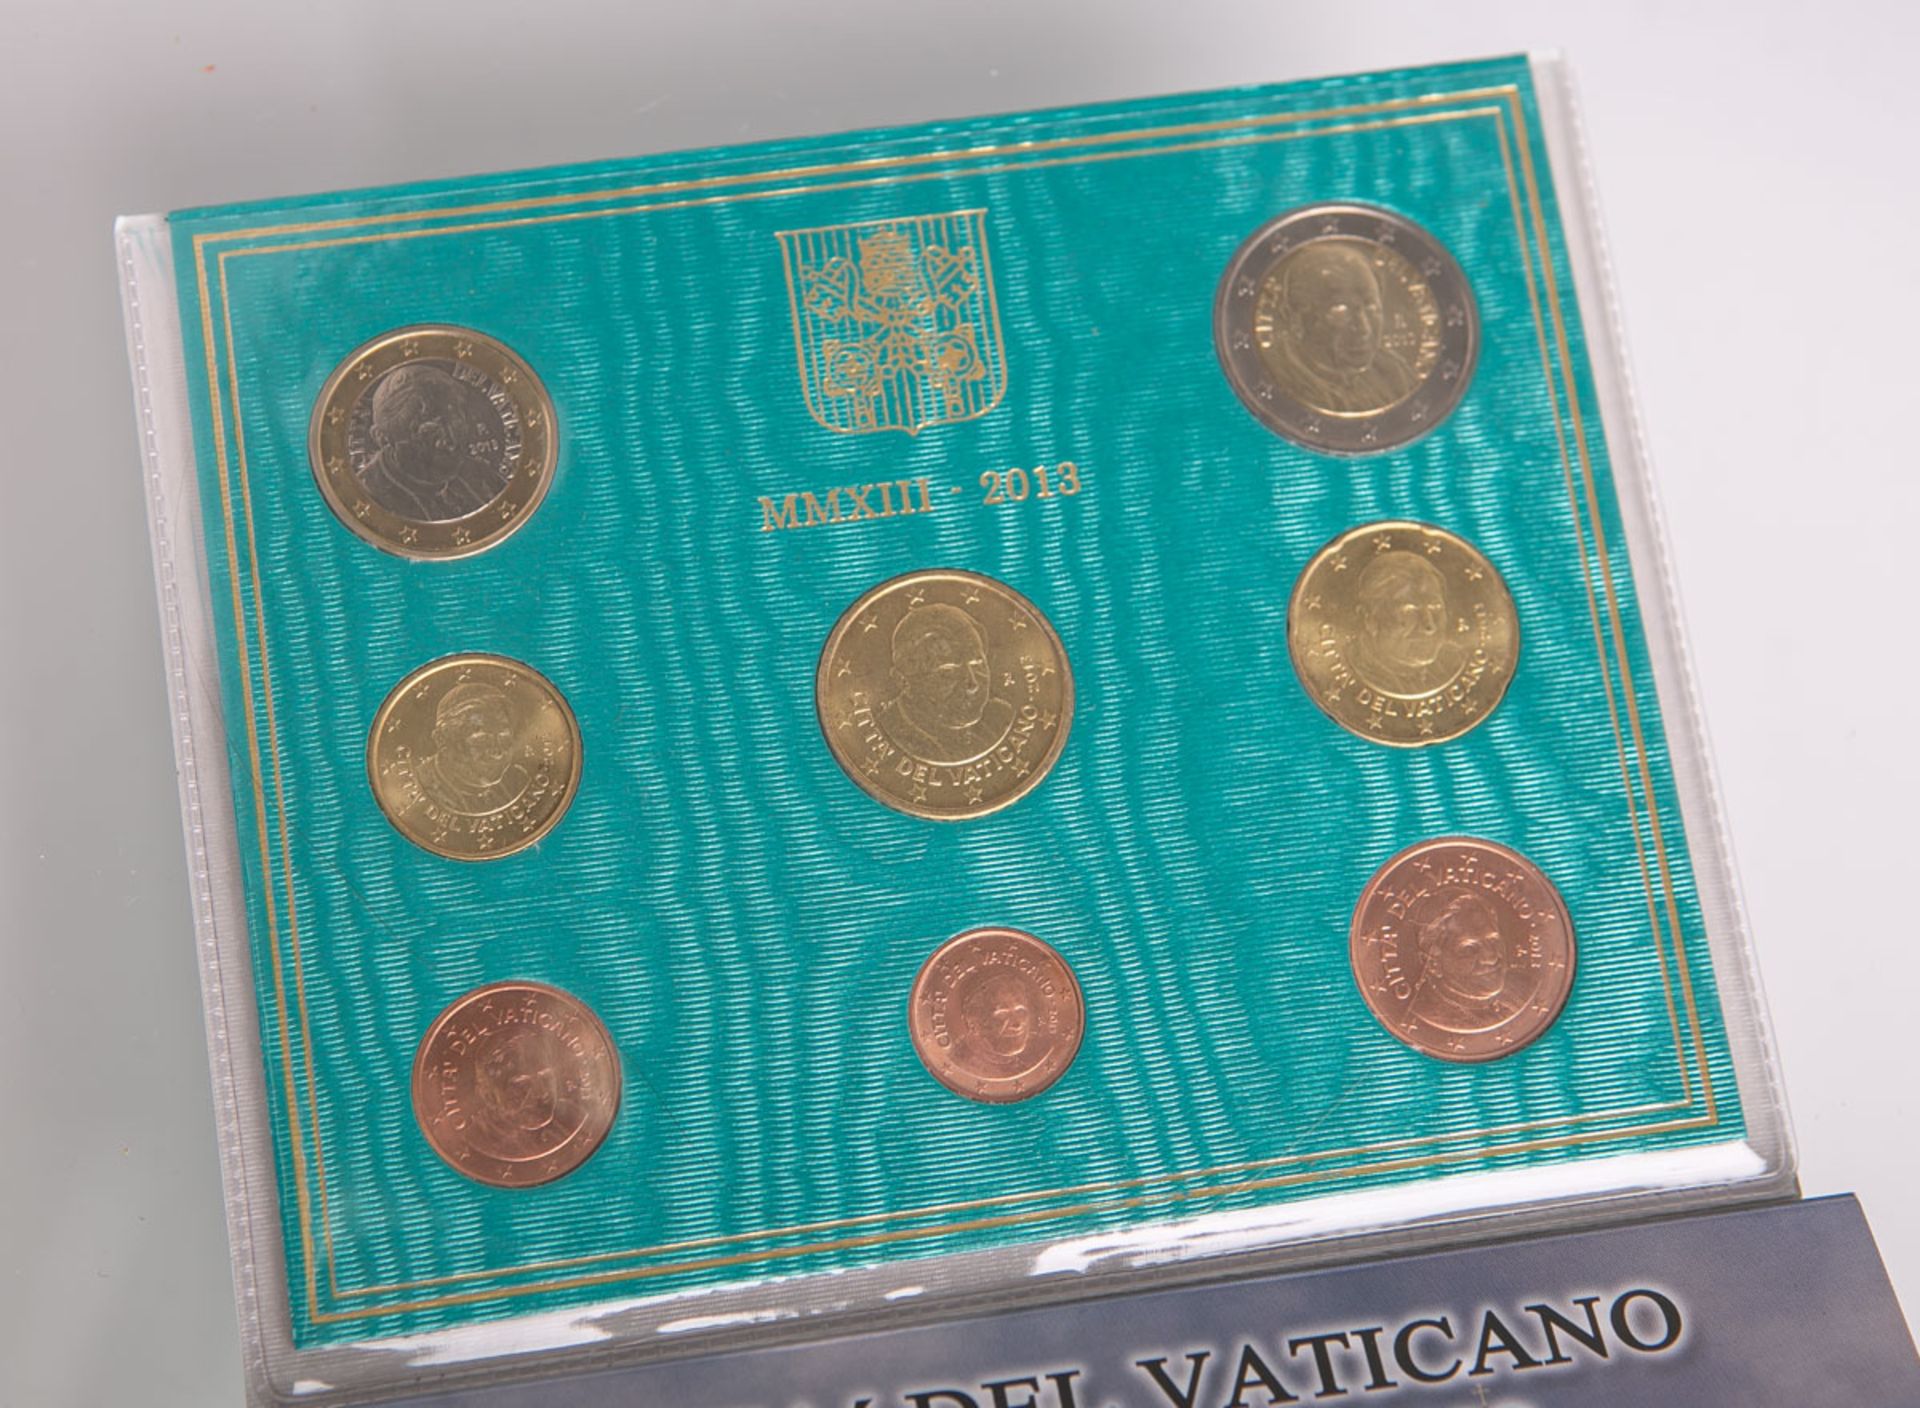 Euro-Kurmünzsatz "Benedikt XVI" (2013, IPZS Italien), 8 Münzen, bestehend aus: 1 u. 2 Euro, 50,